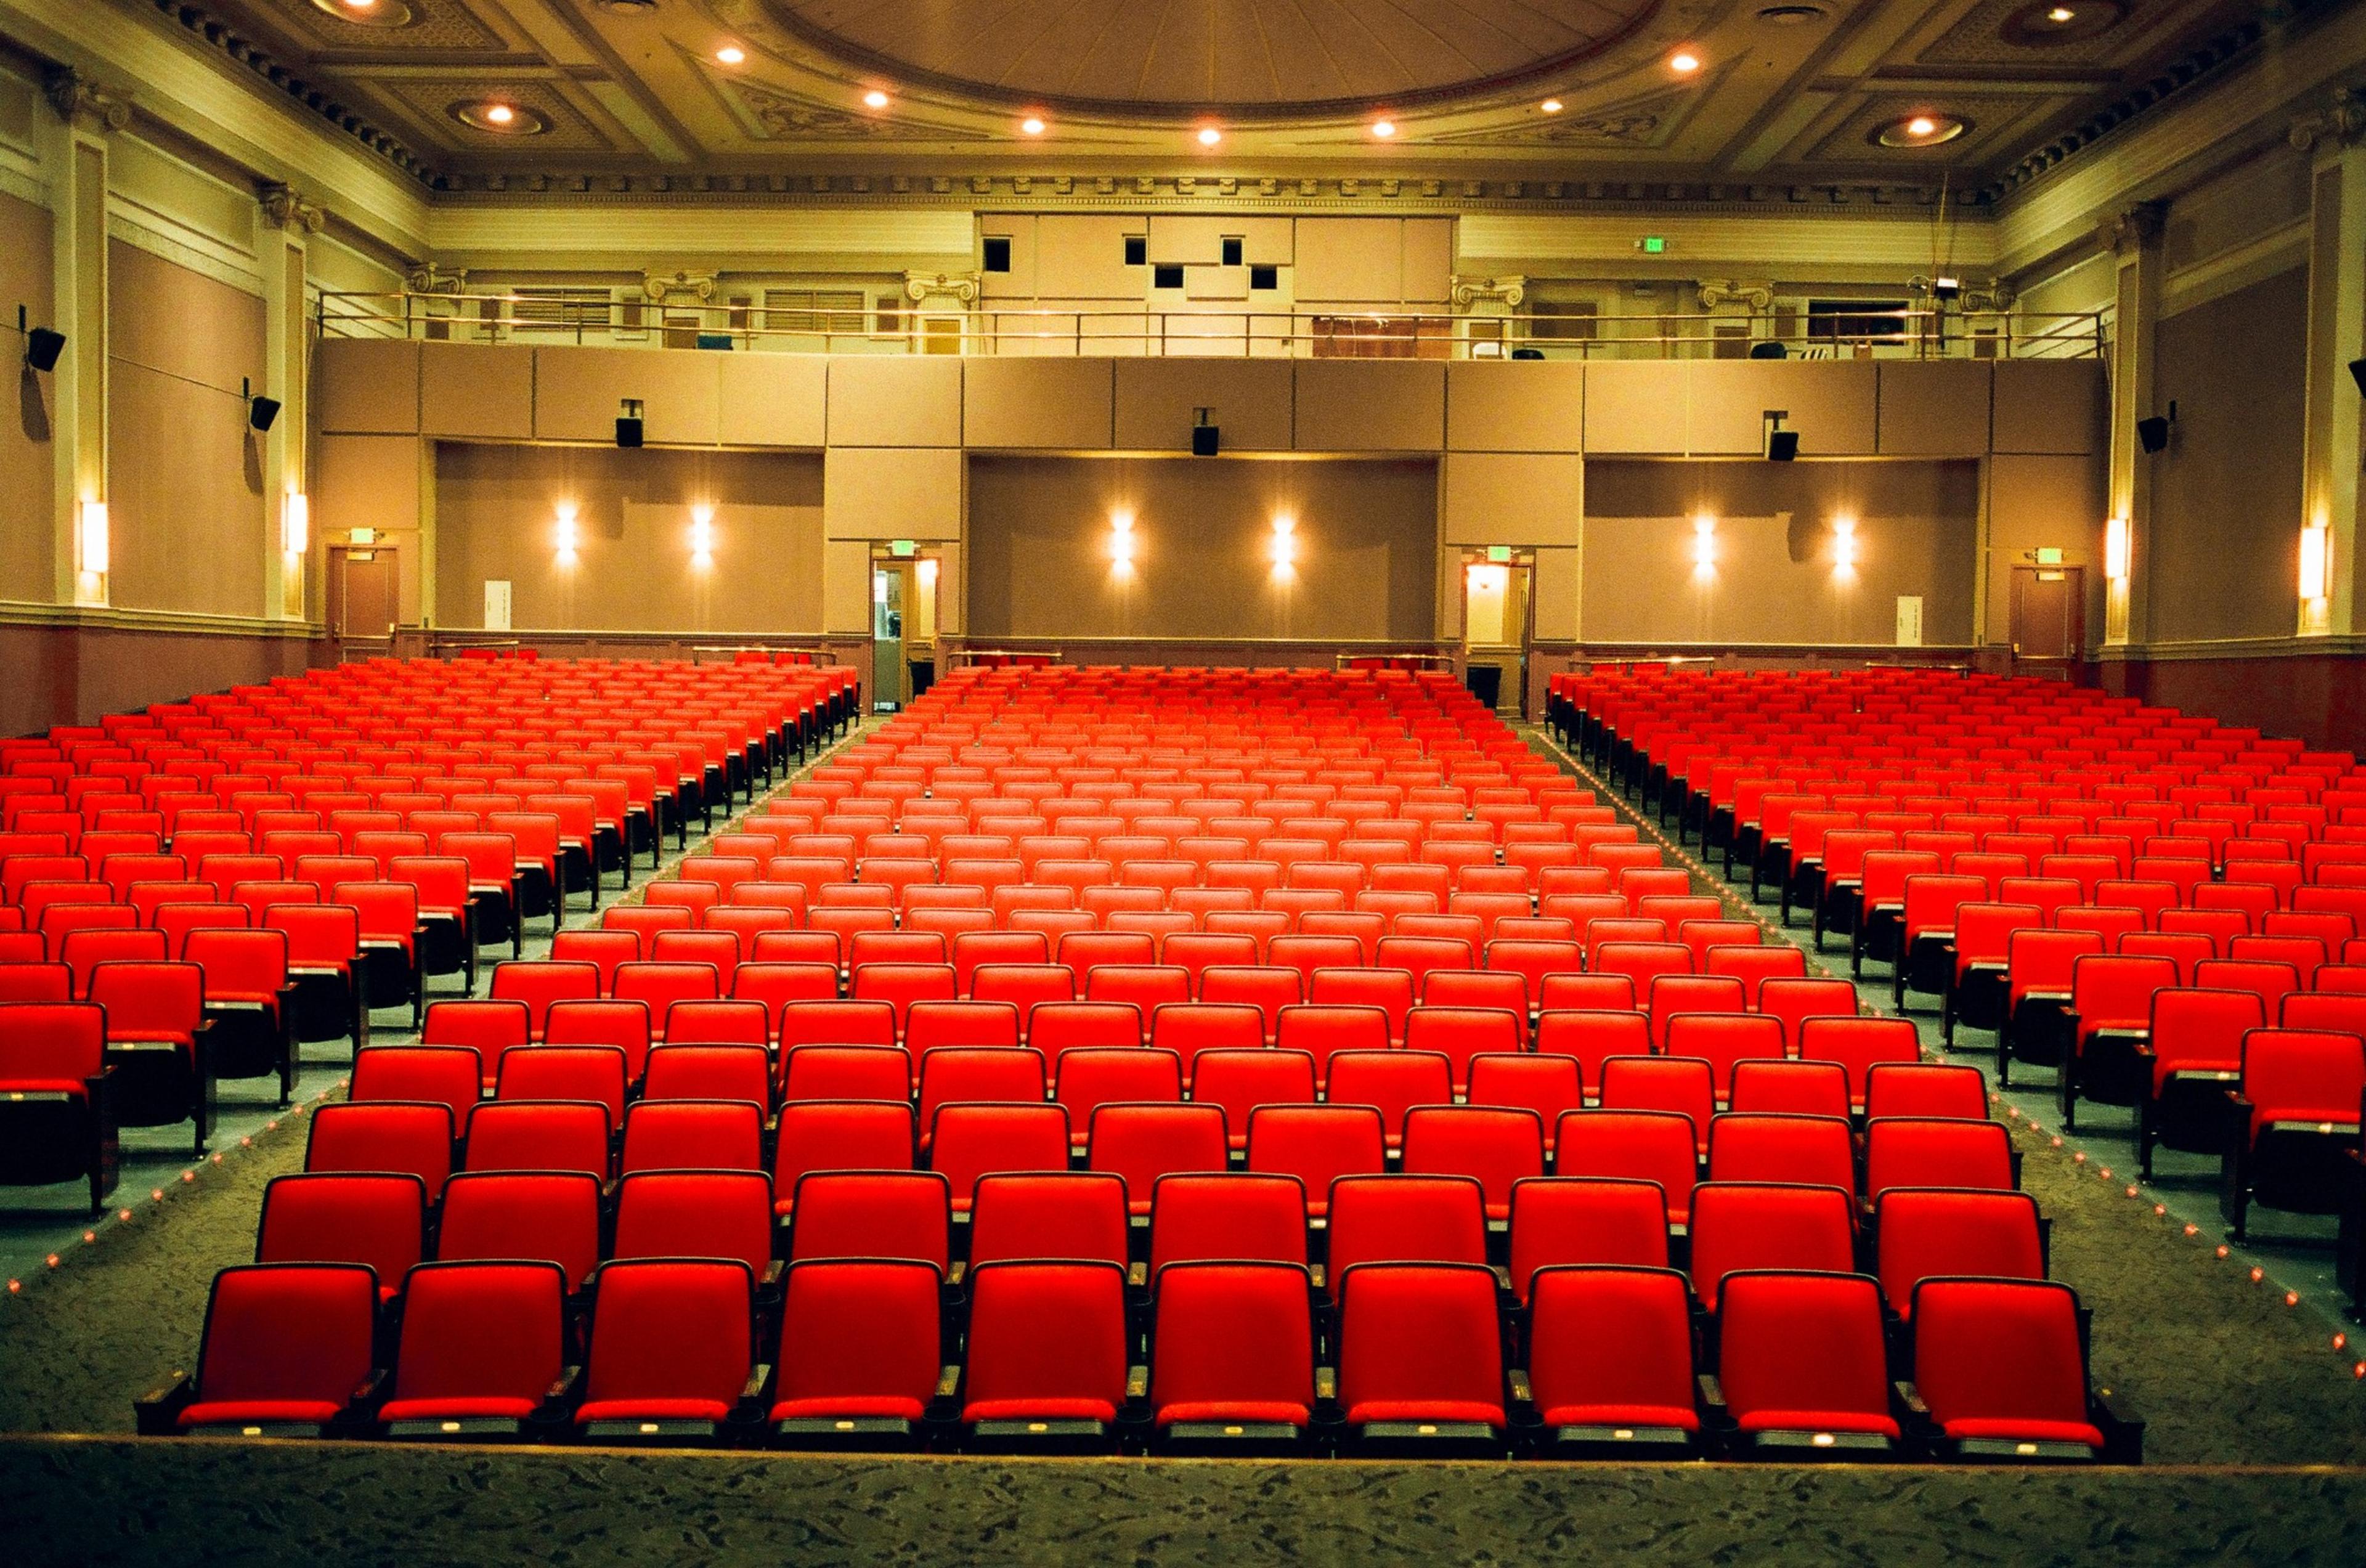 Kentucky Theatre